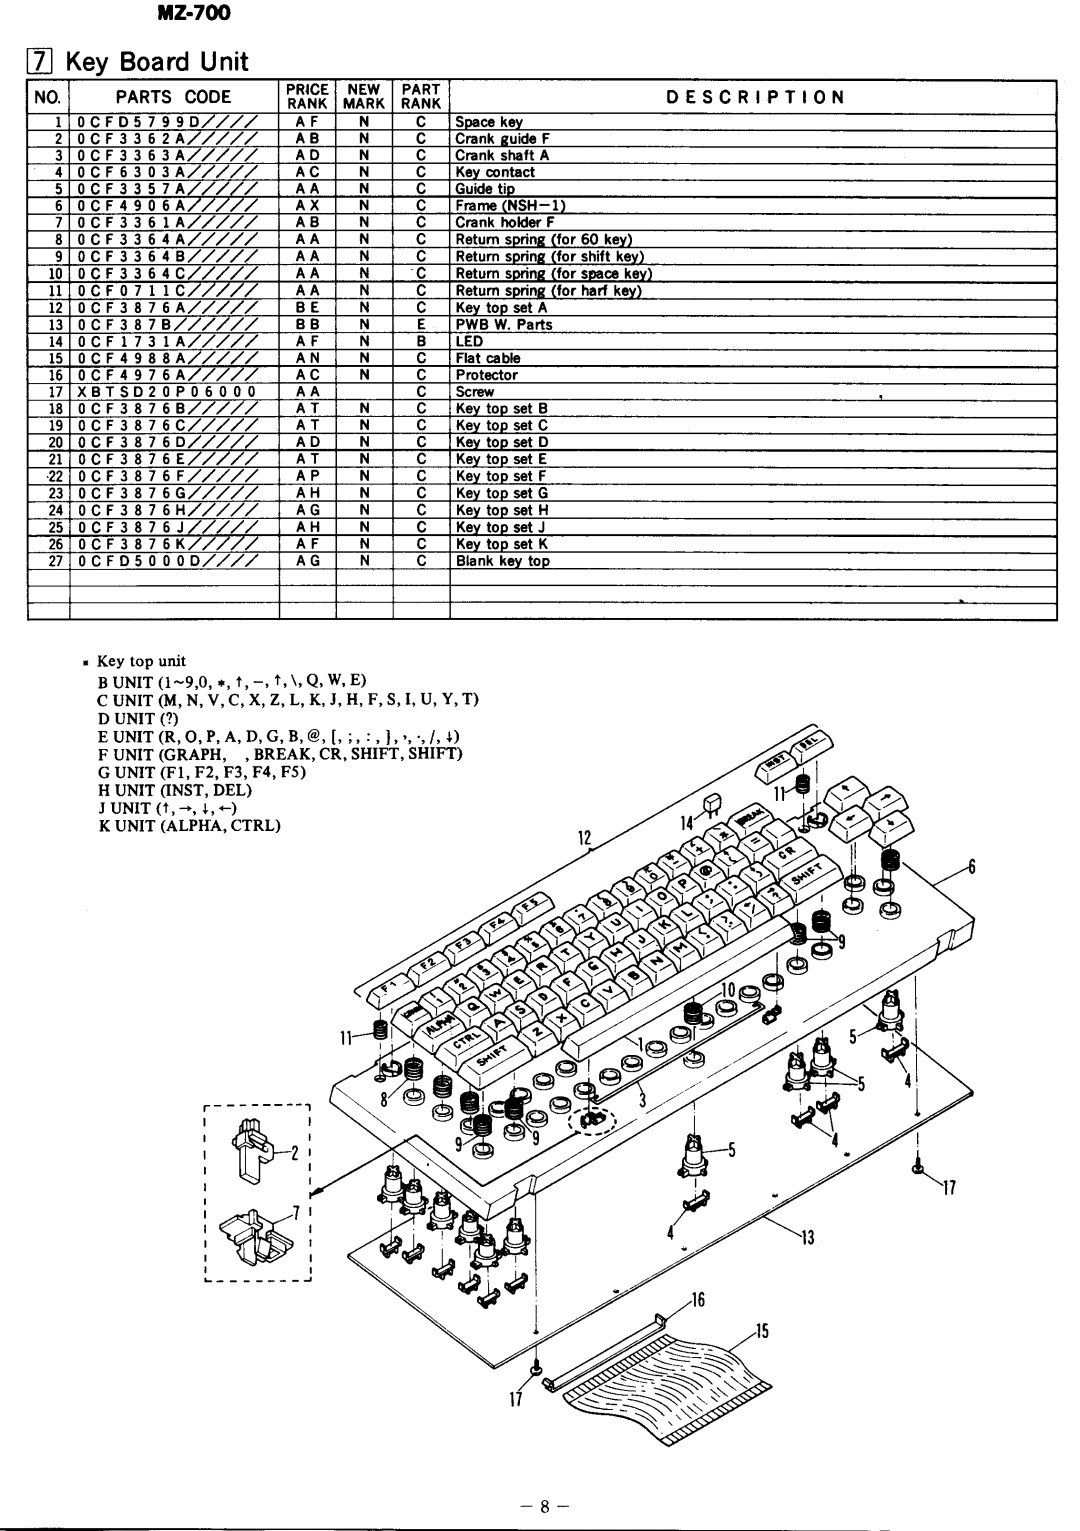 Sharp MZ-700 manual Key Board Unit, ~7~13, MZ·700 